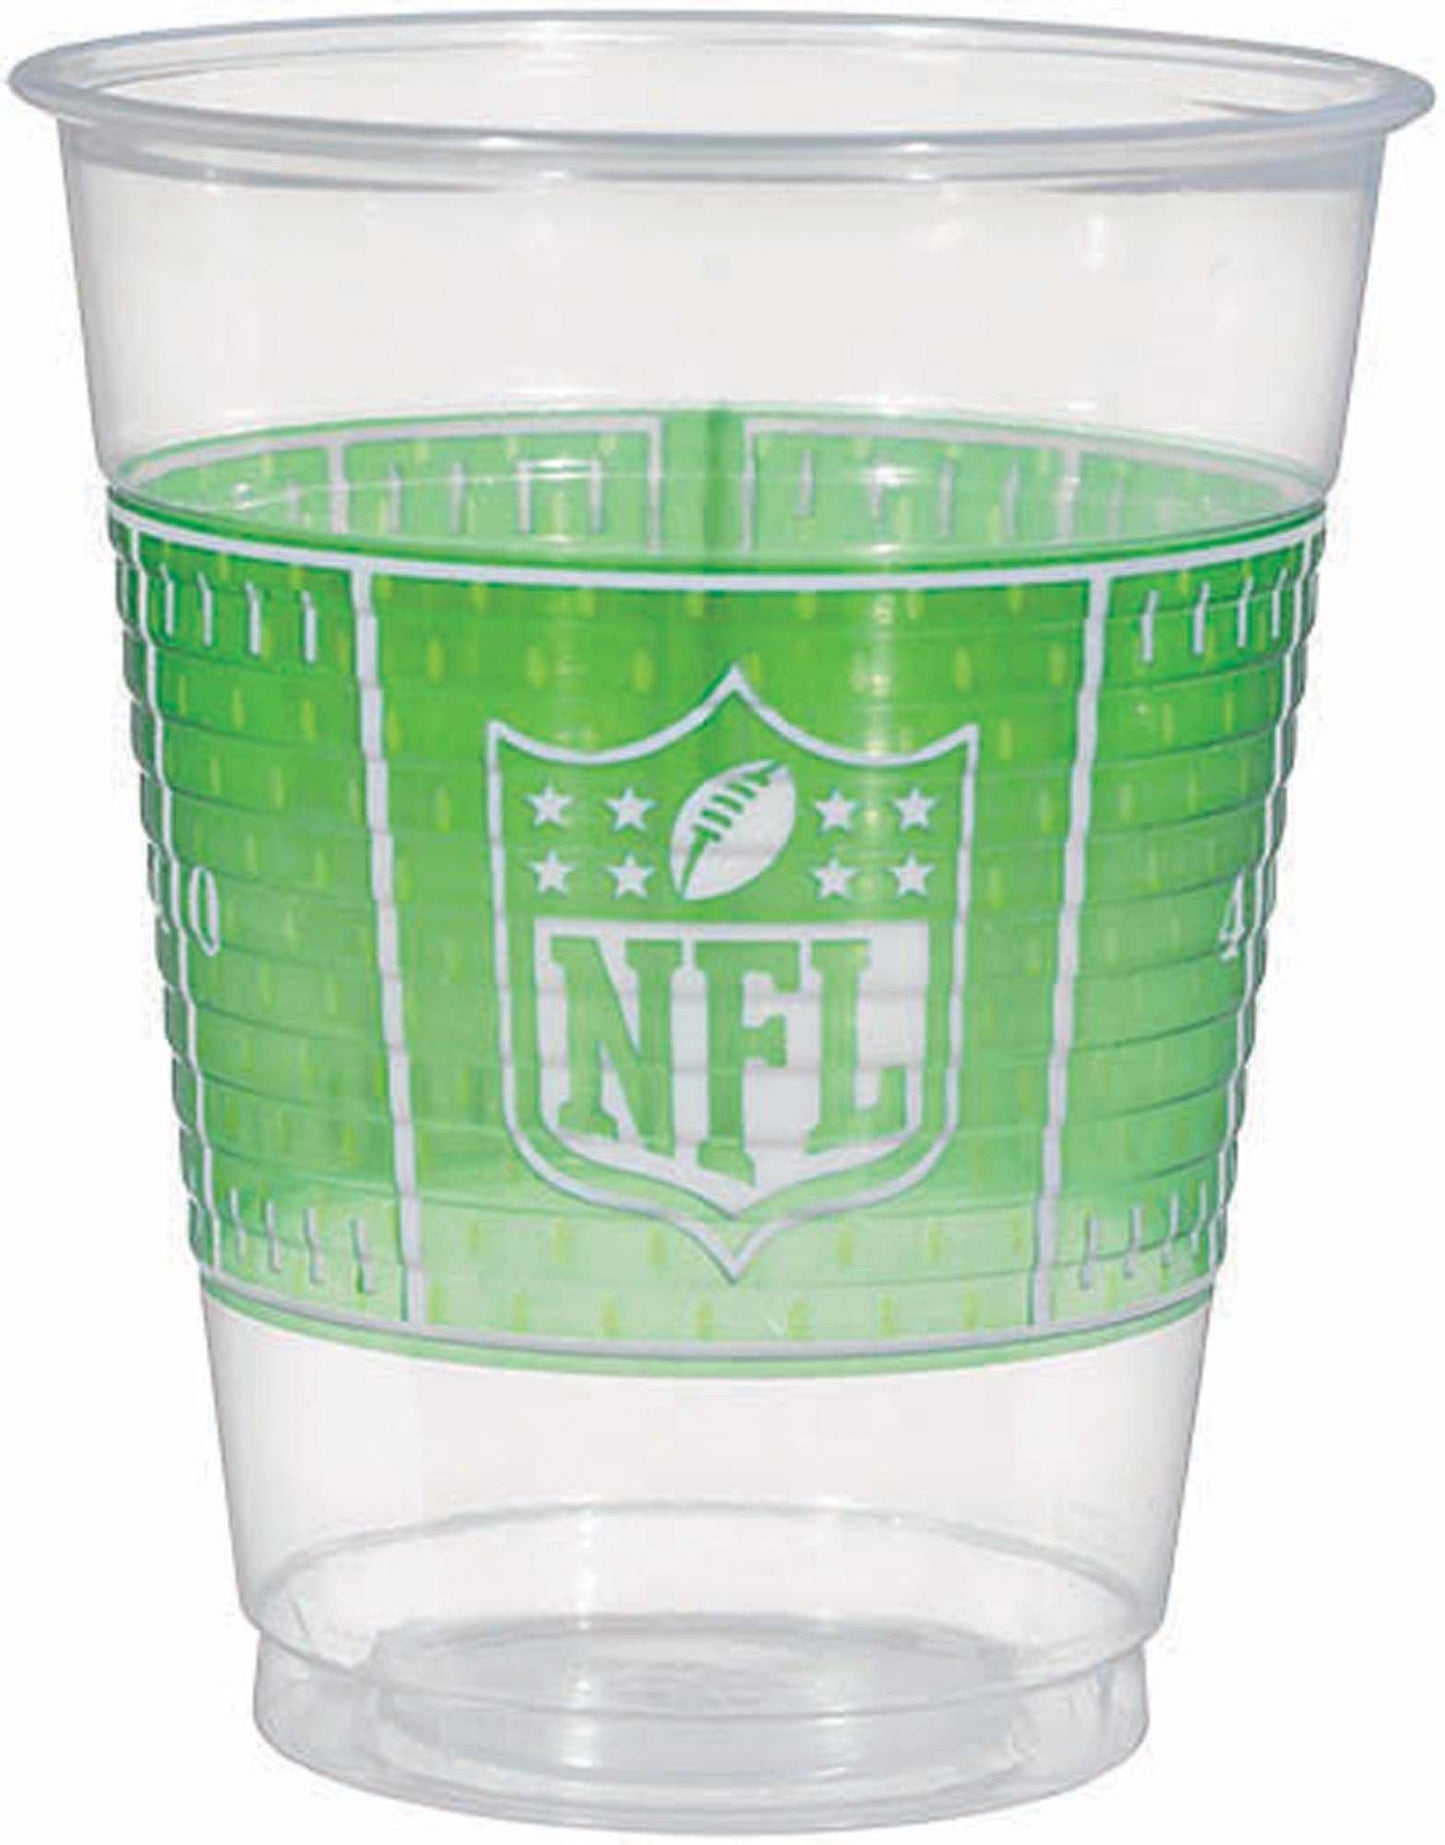 16oz. Plastic Cups: NFL Drive (25ct.)